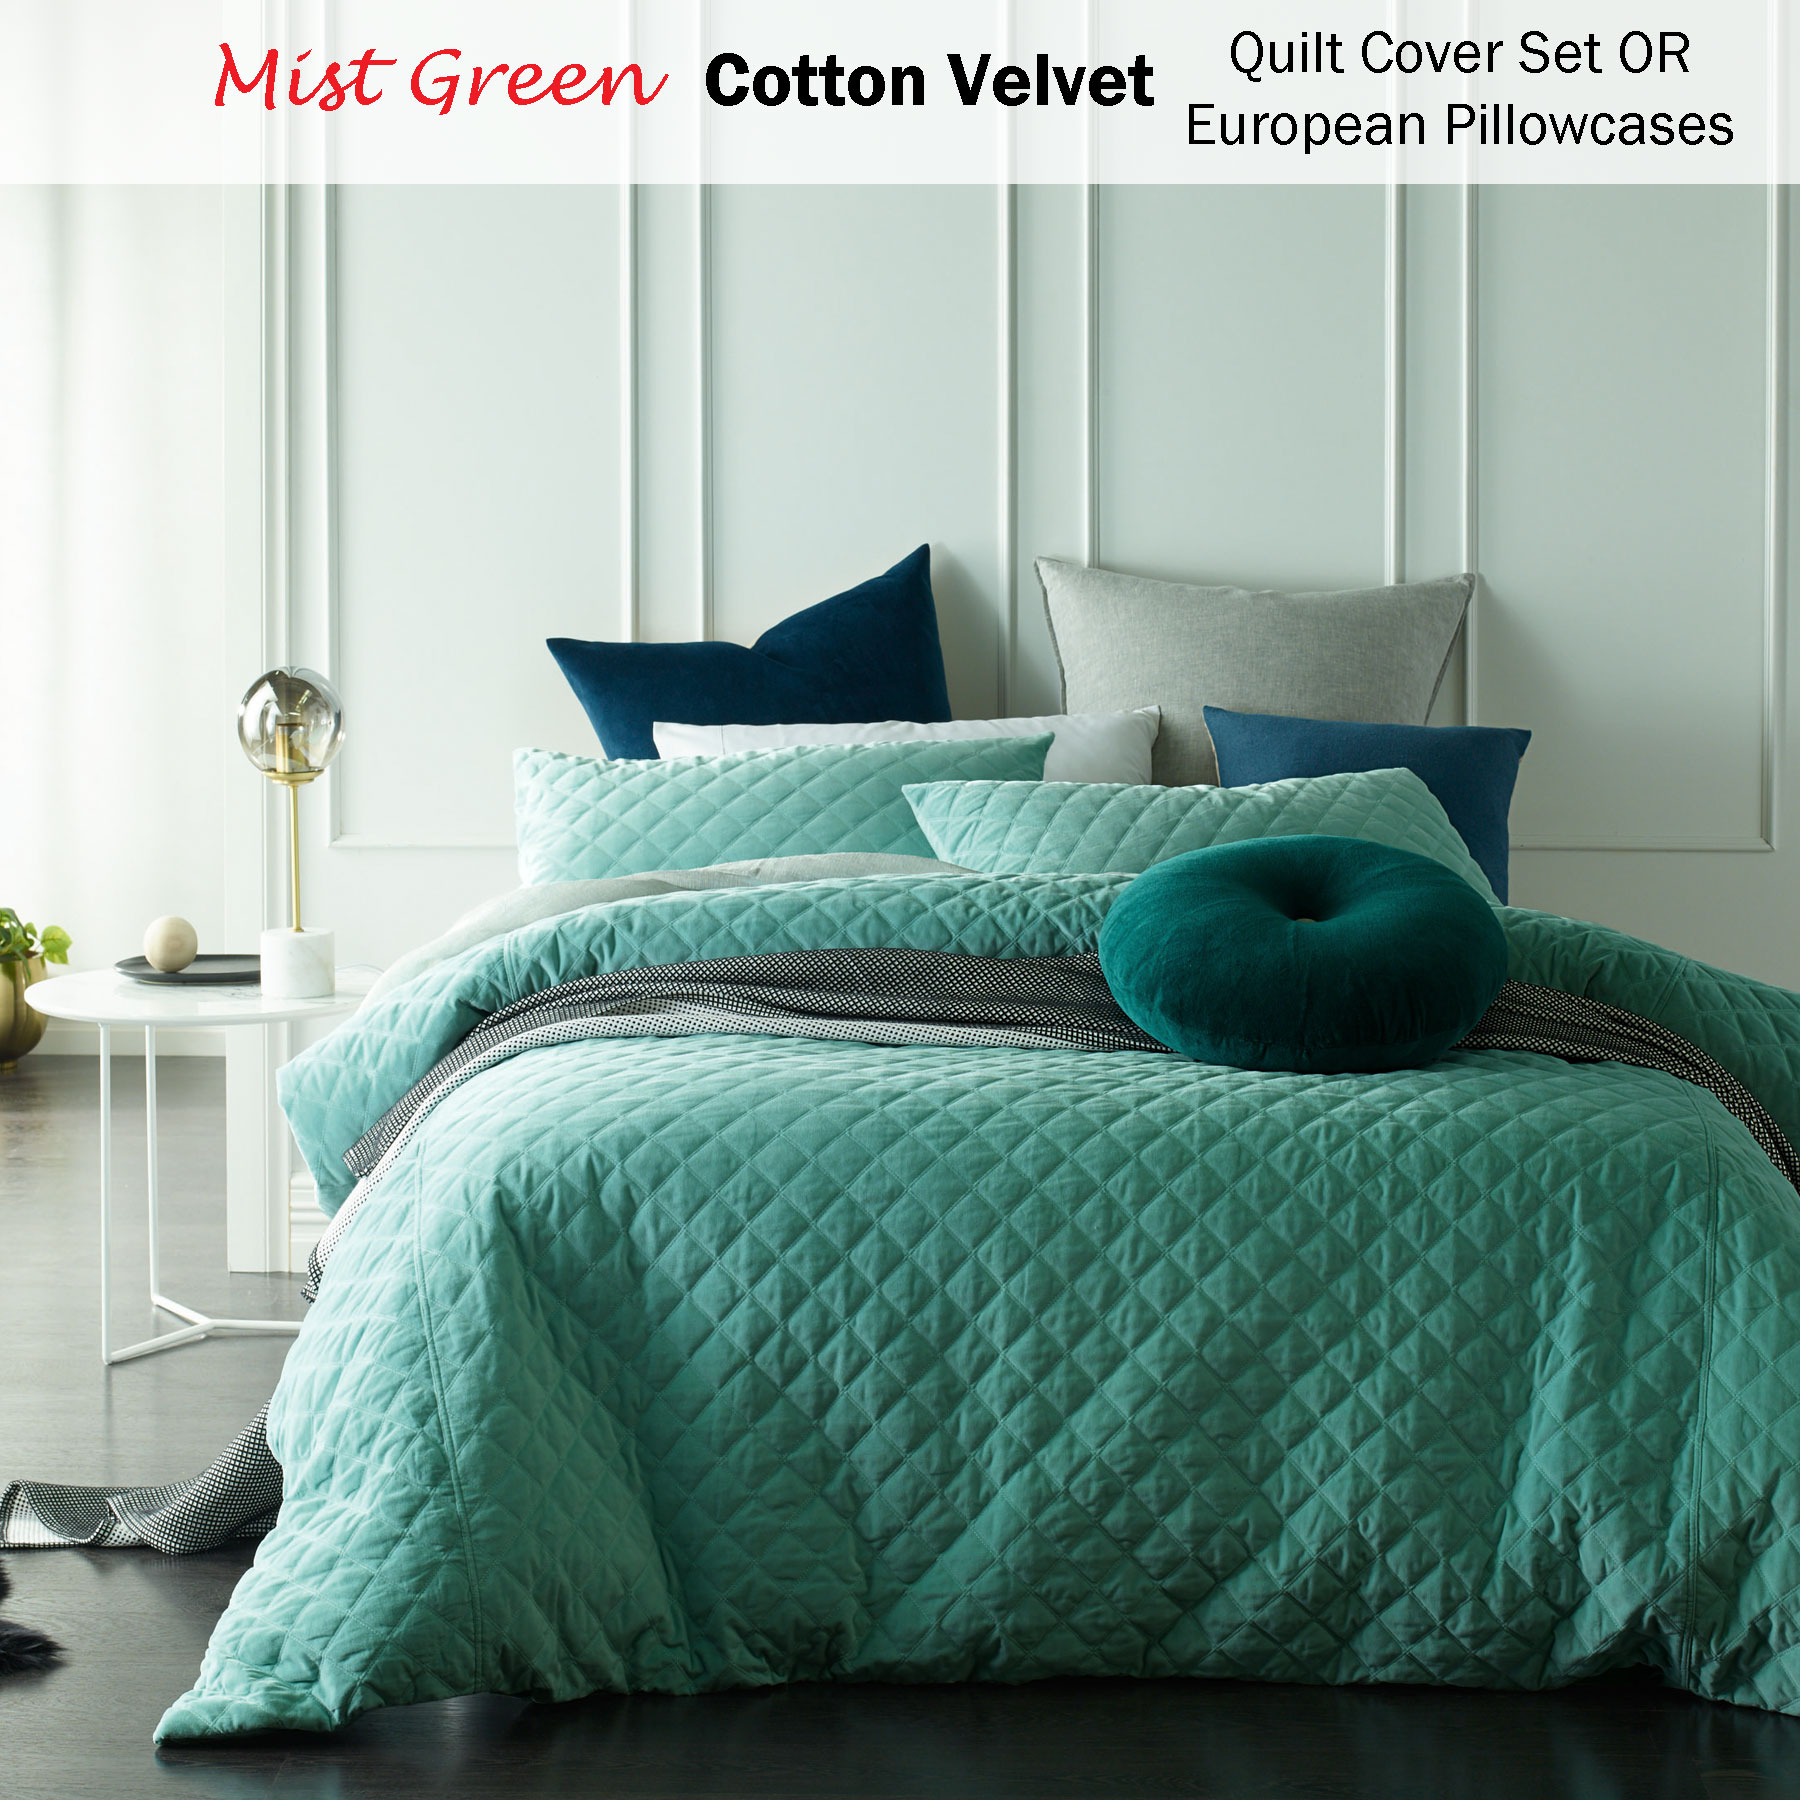 Mist Green Cotton Velvet Diamond Quilted Quilt Cover Set Or